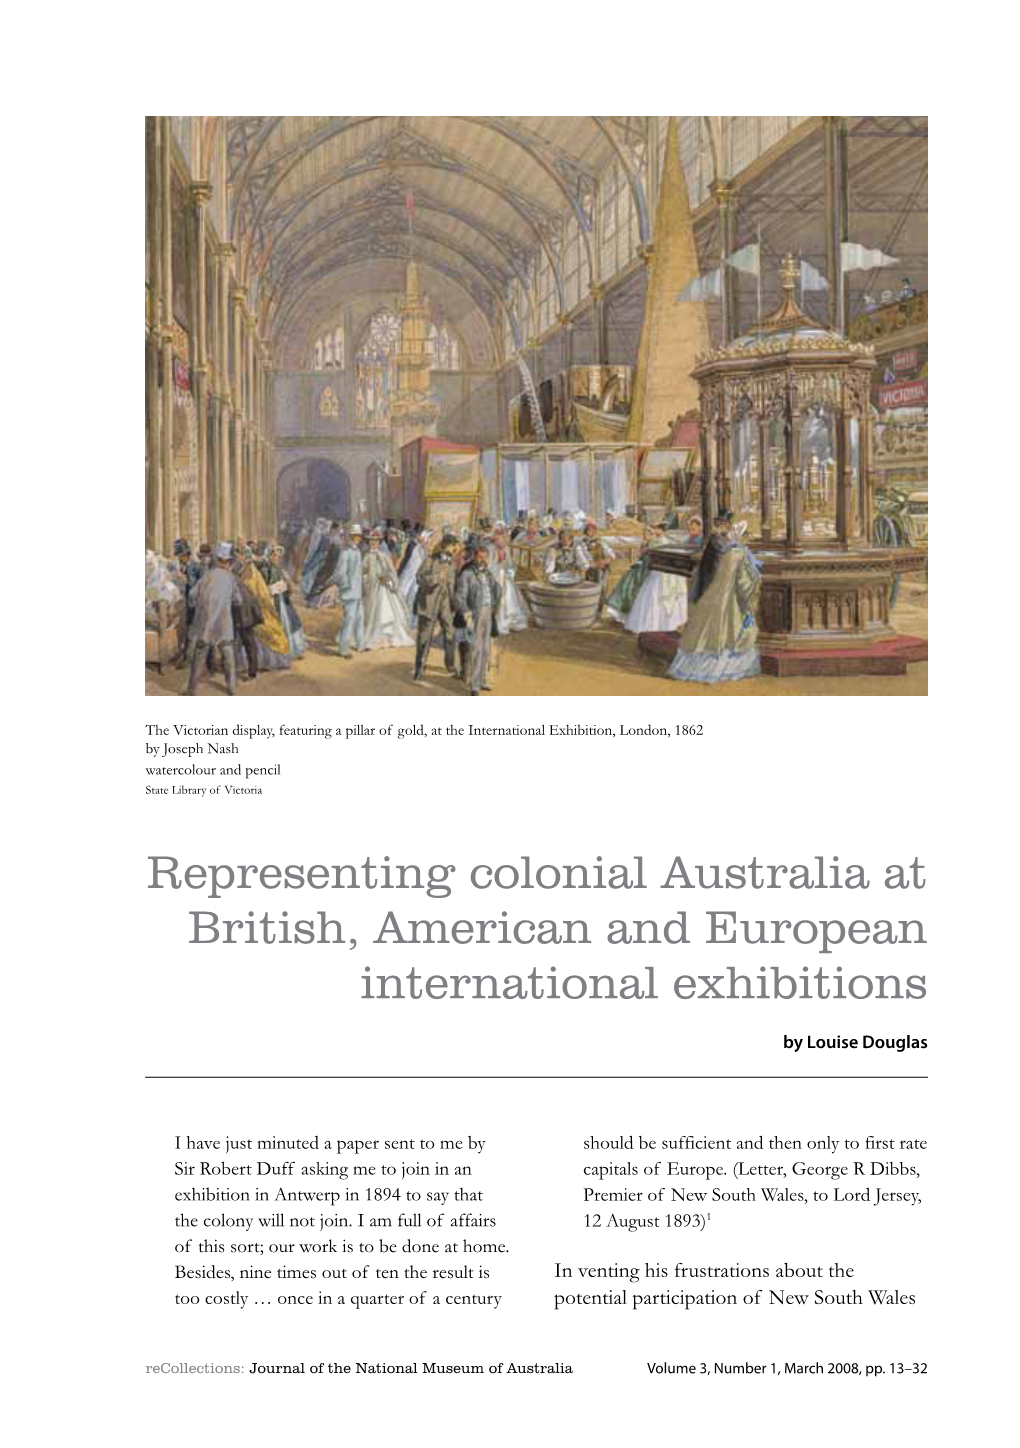 Representing Colonial Australia at British, American and European International Exhibitions